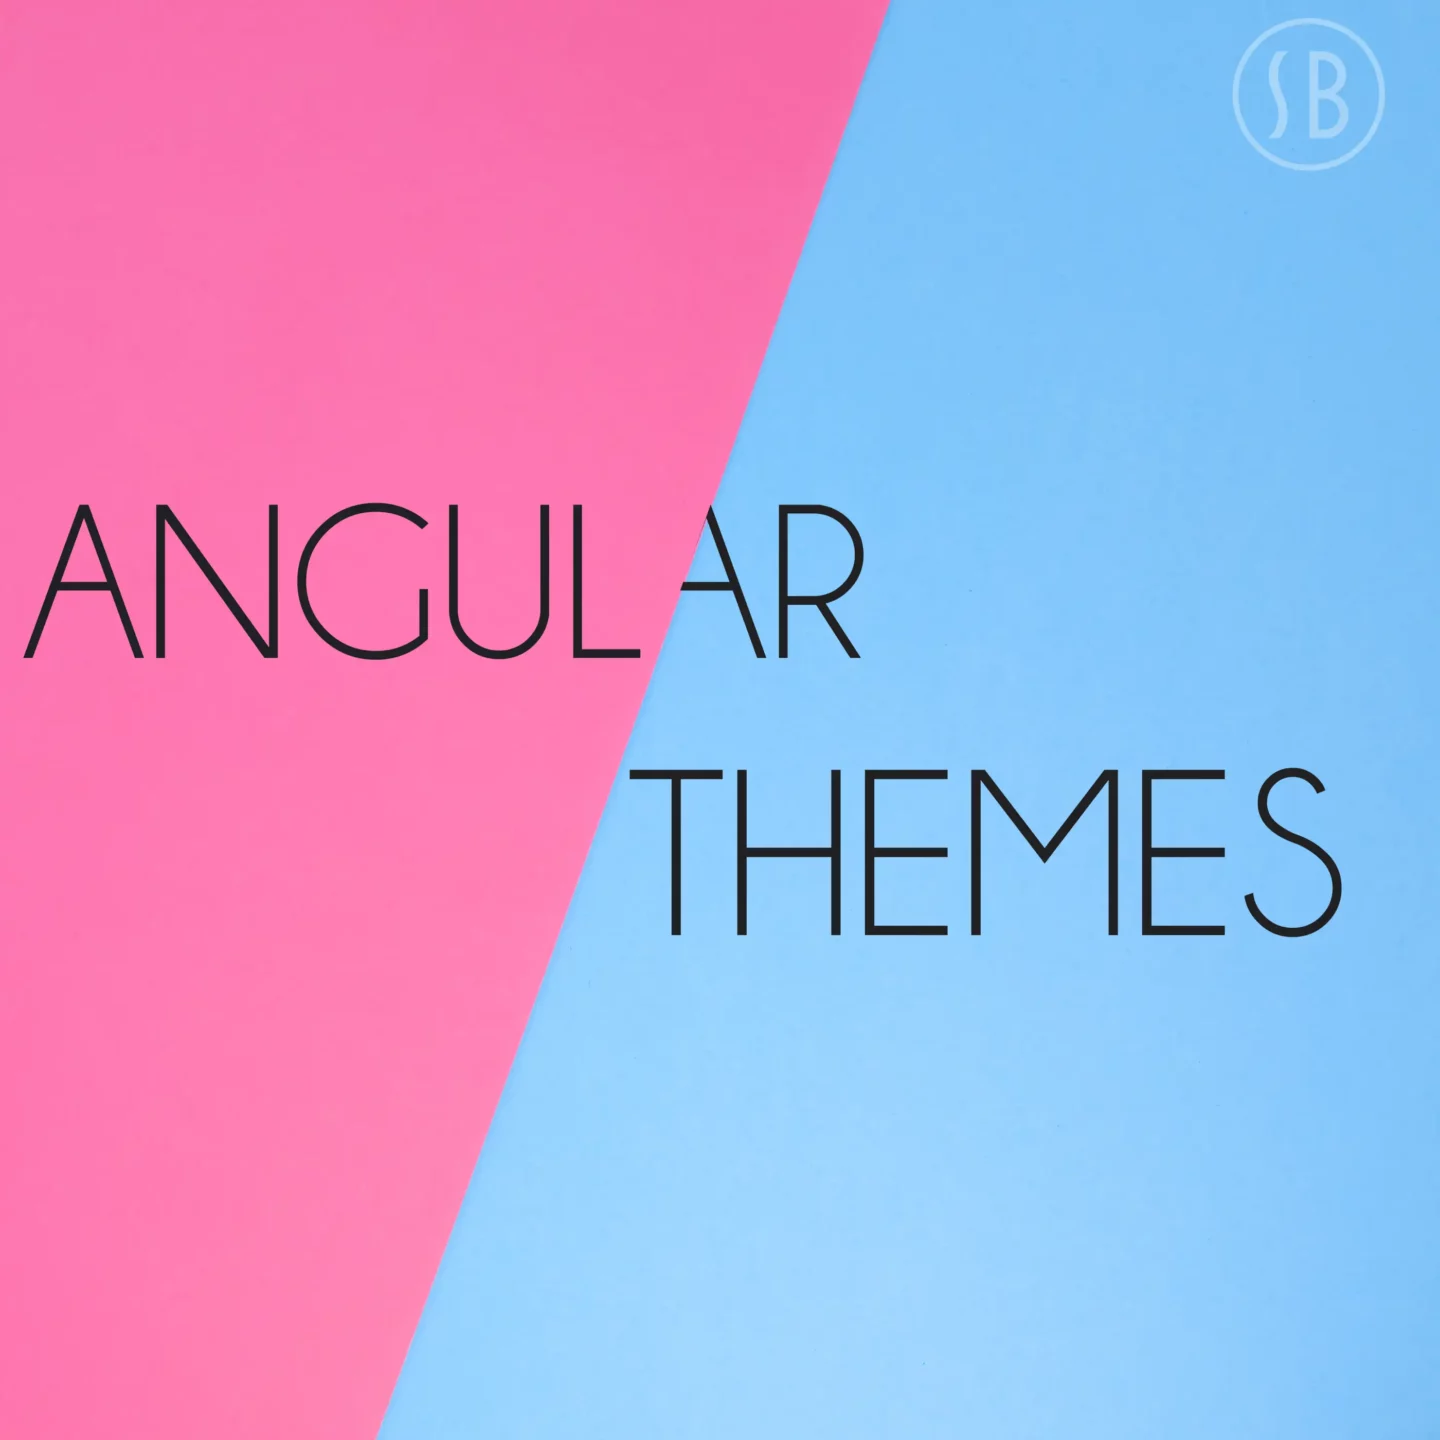 Album cover art for Angular Themes